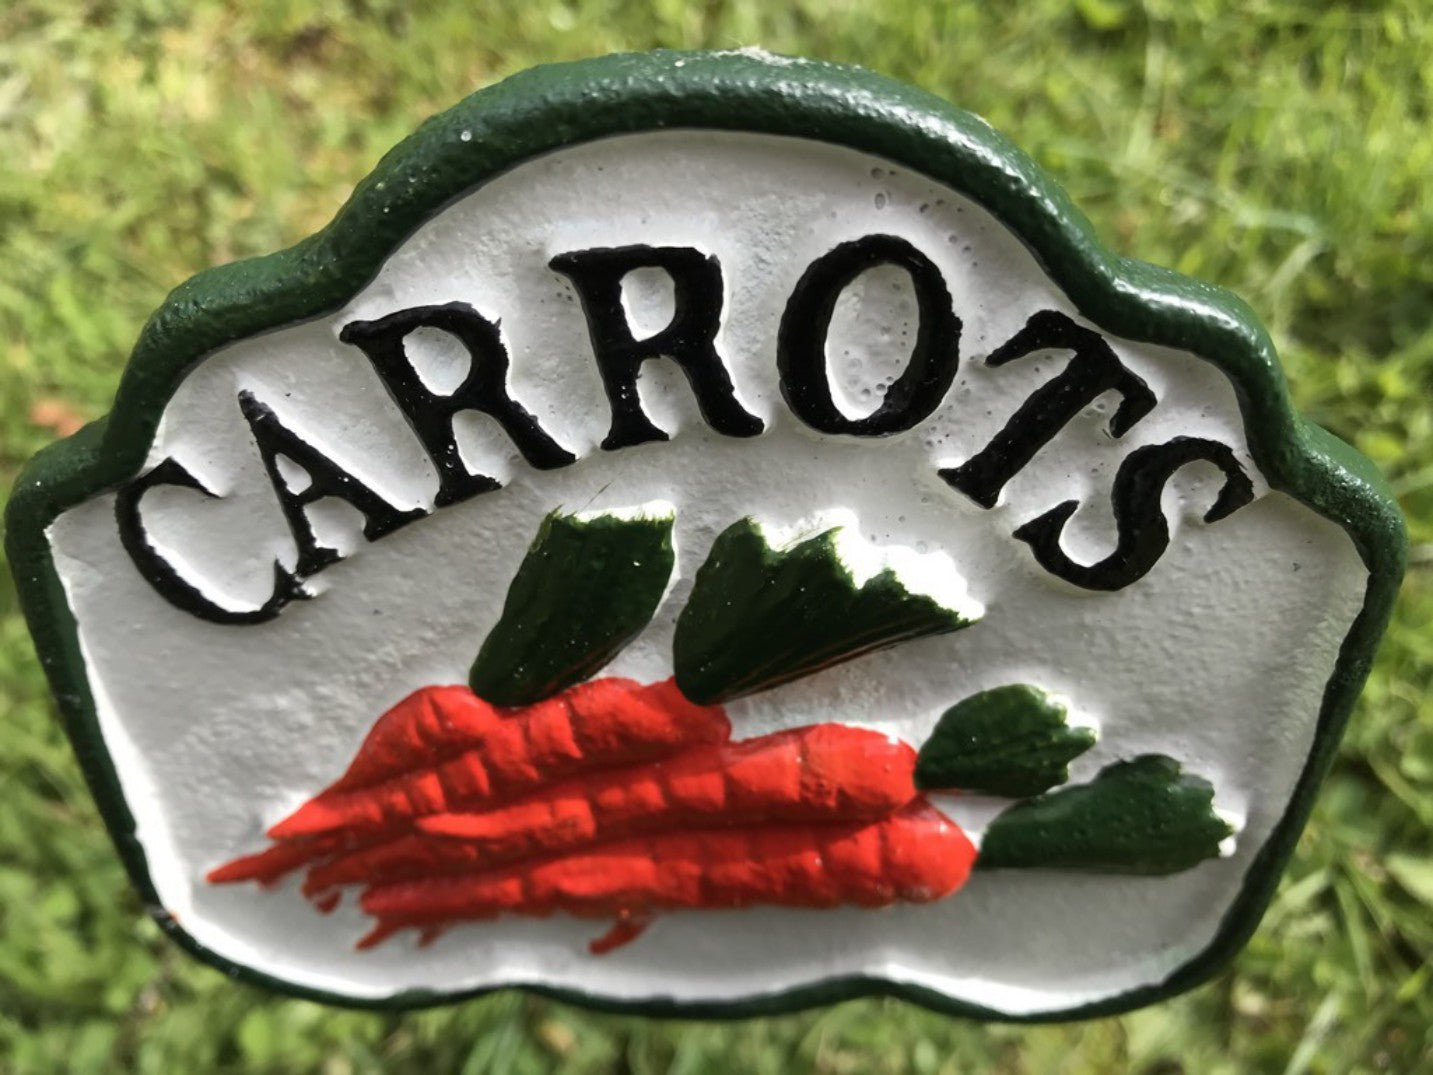 Garden Vegetable Sign CARROTS Cast Iron Vegetable Marker